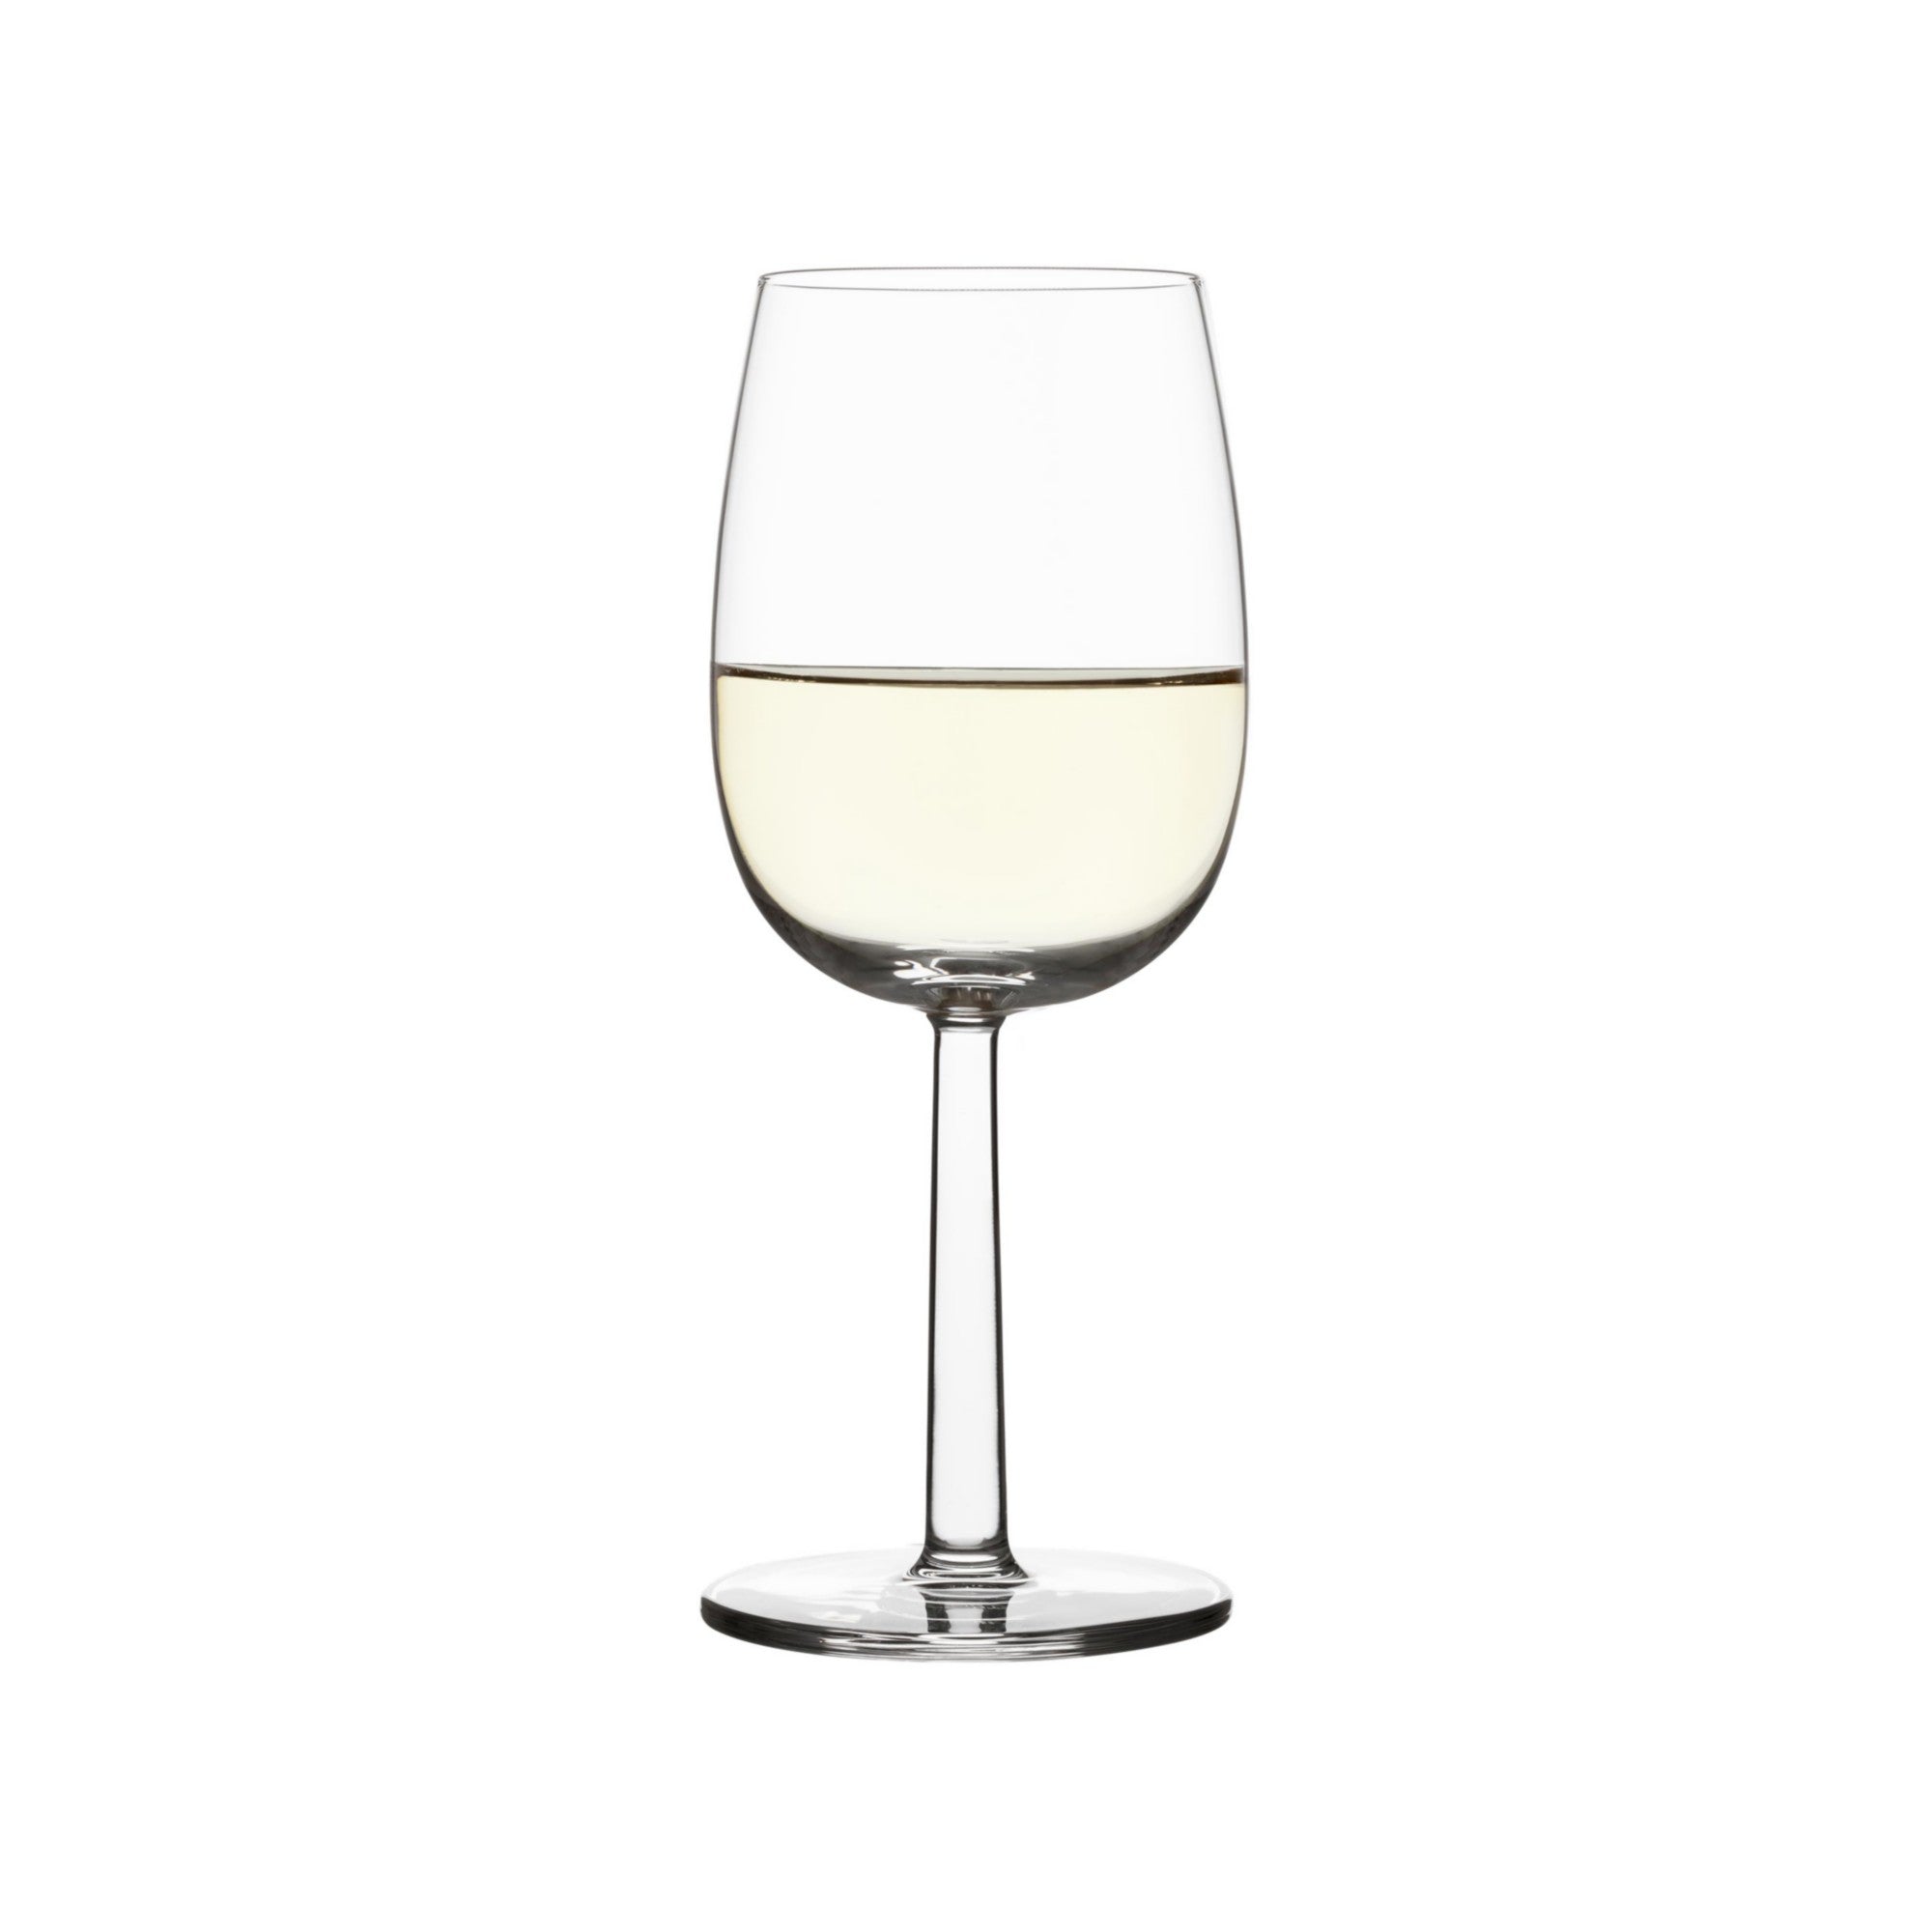 Raami White wine glass set